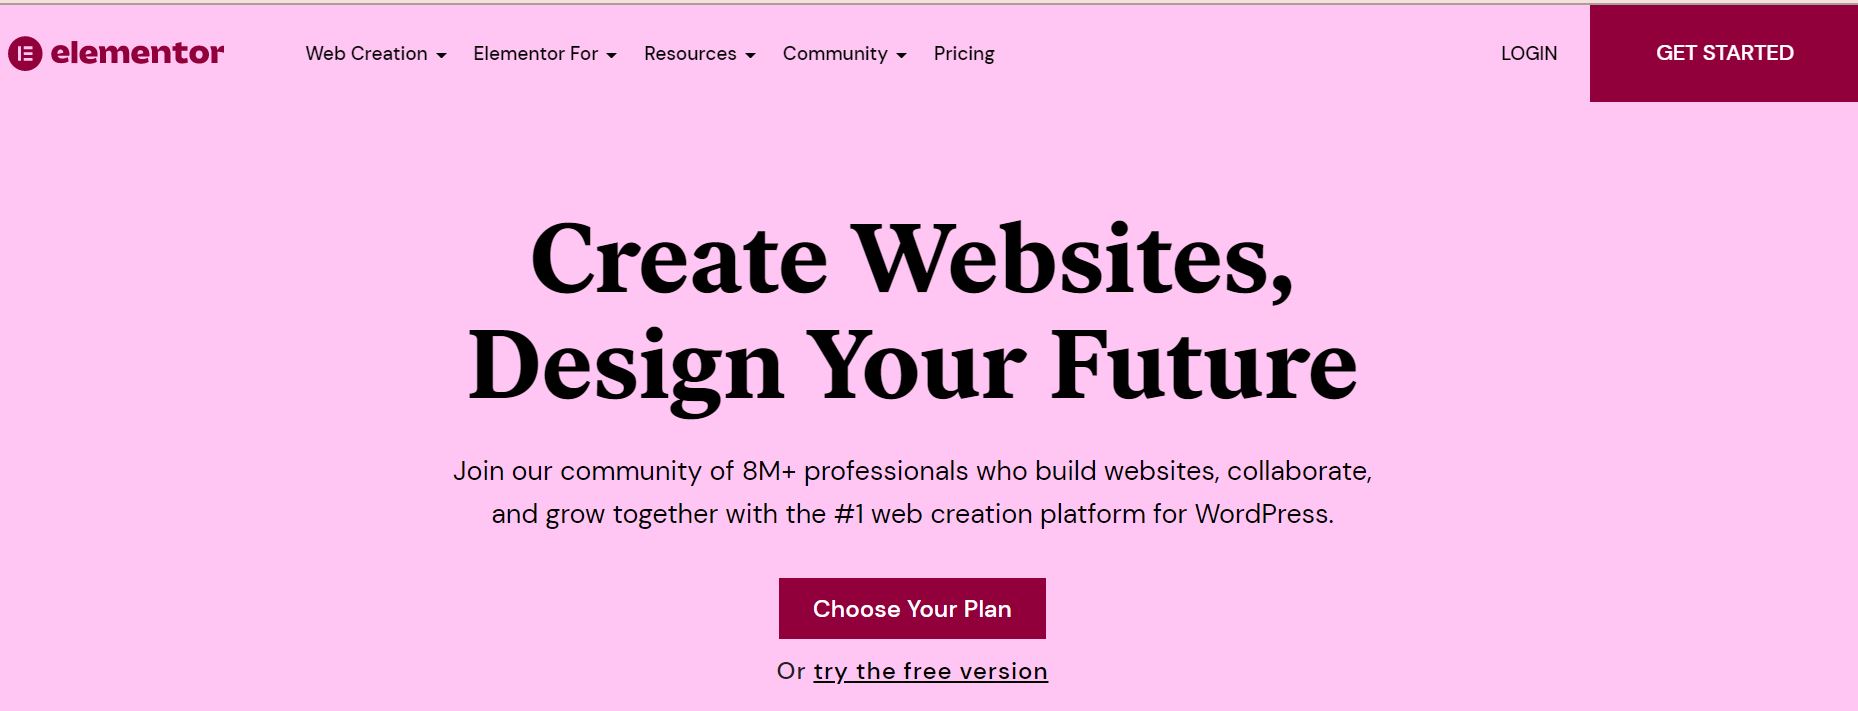 Elementor: Free Website Builder Plugin for WordPress